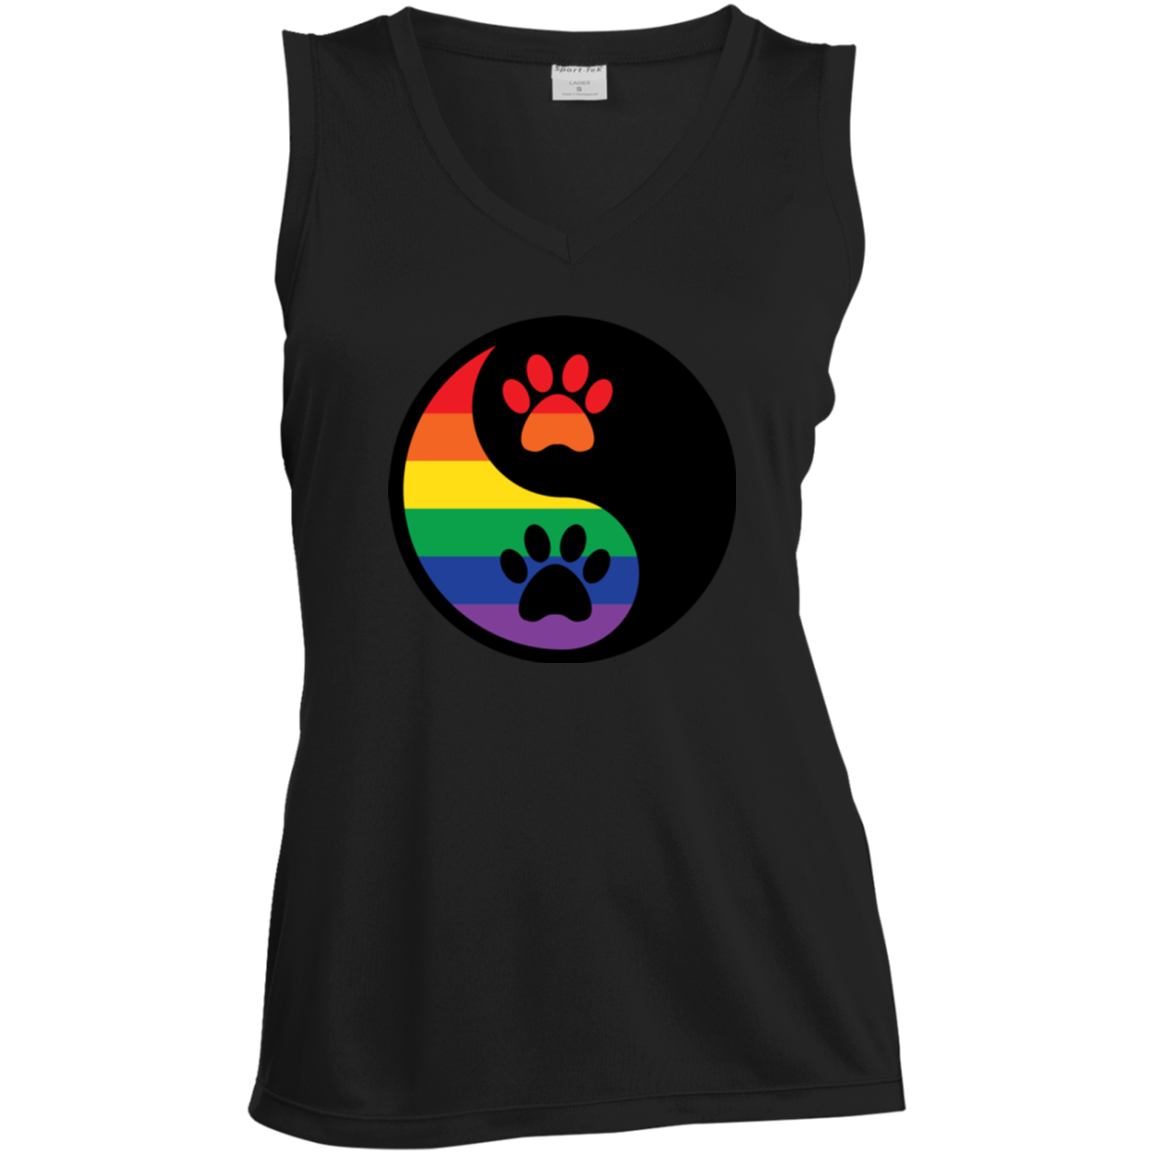 Rainbow Paw Yin Yang Pet black sleeveless Shirt For women LGBT Pride Tshirt for Women